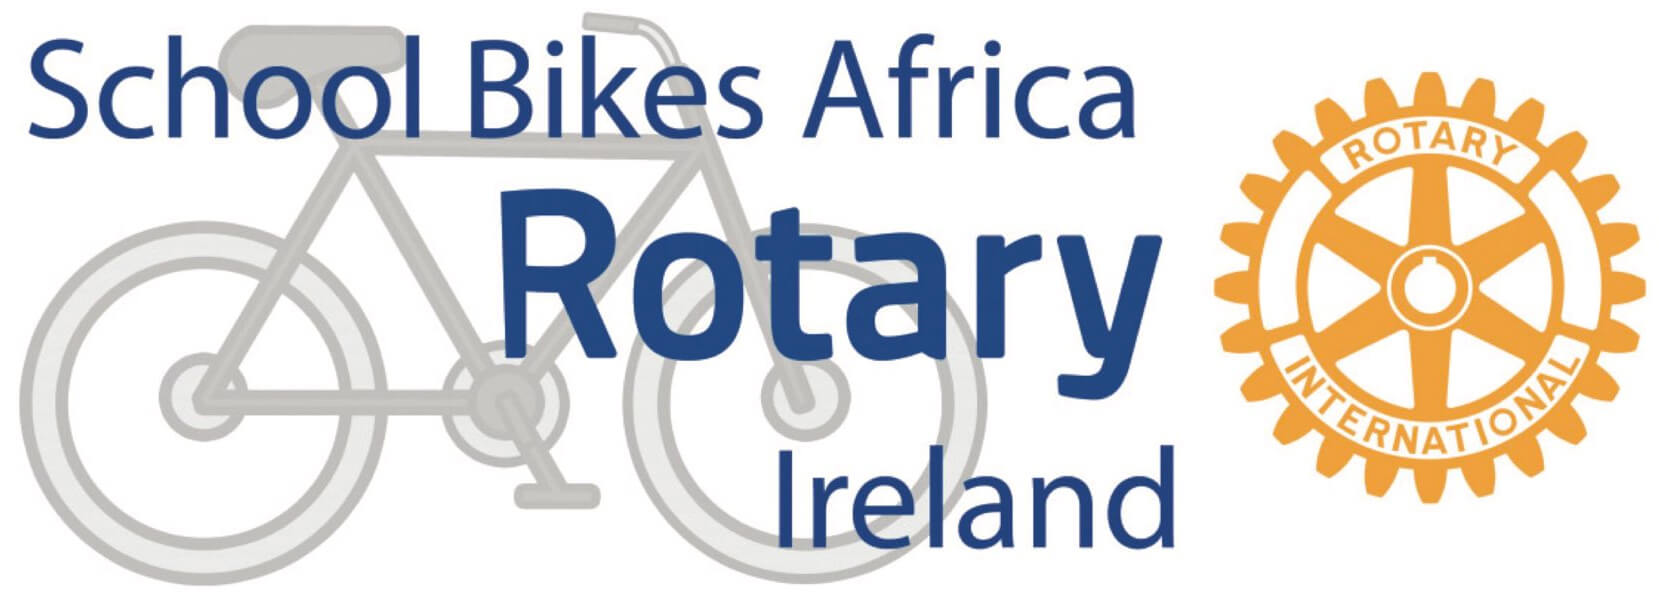 School Bikes Africa - Rotary Ireland 